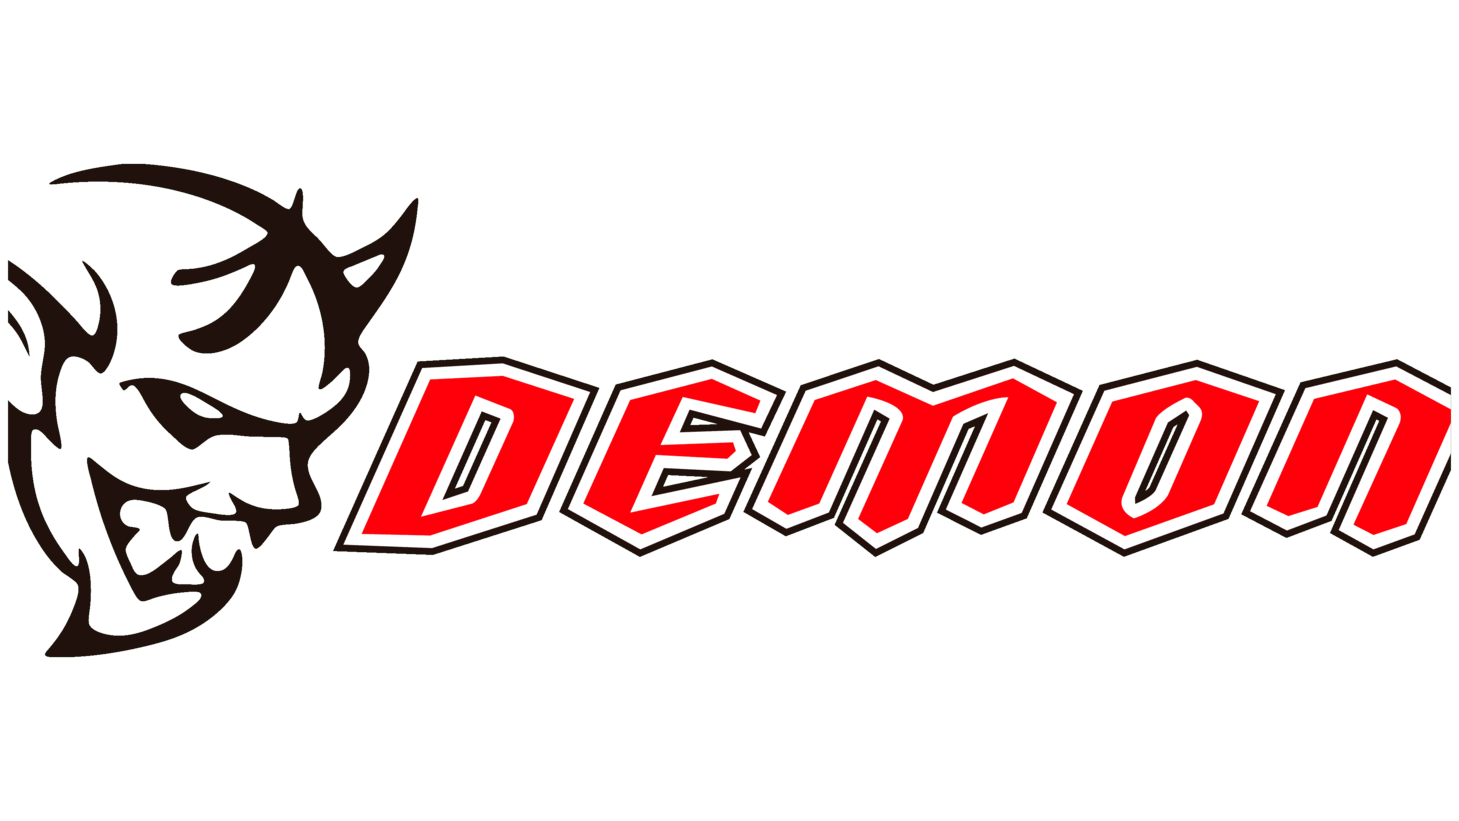 Dodge demon symbol